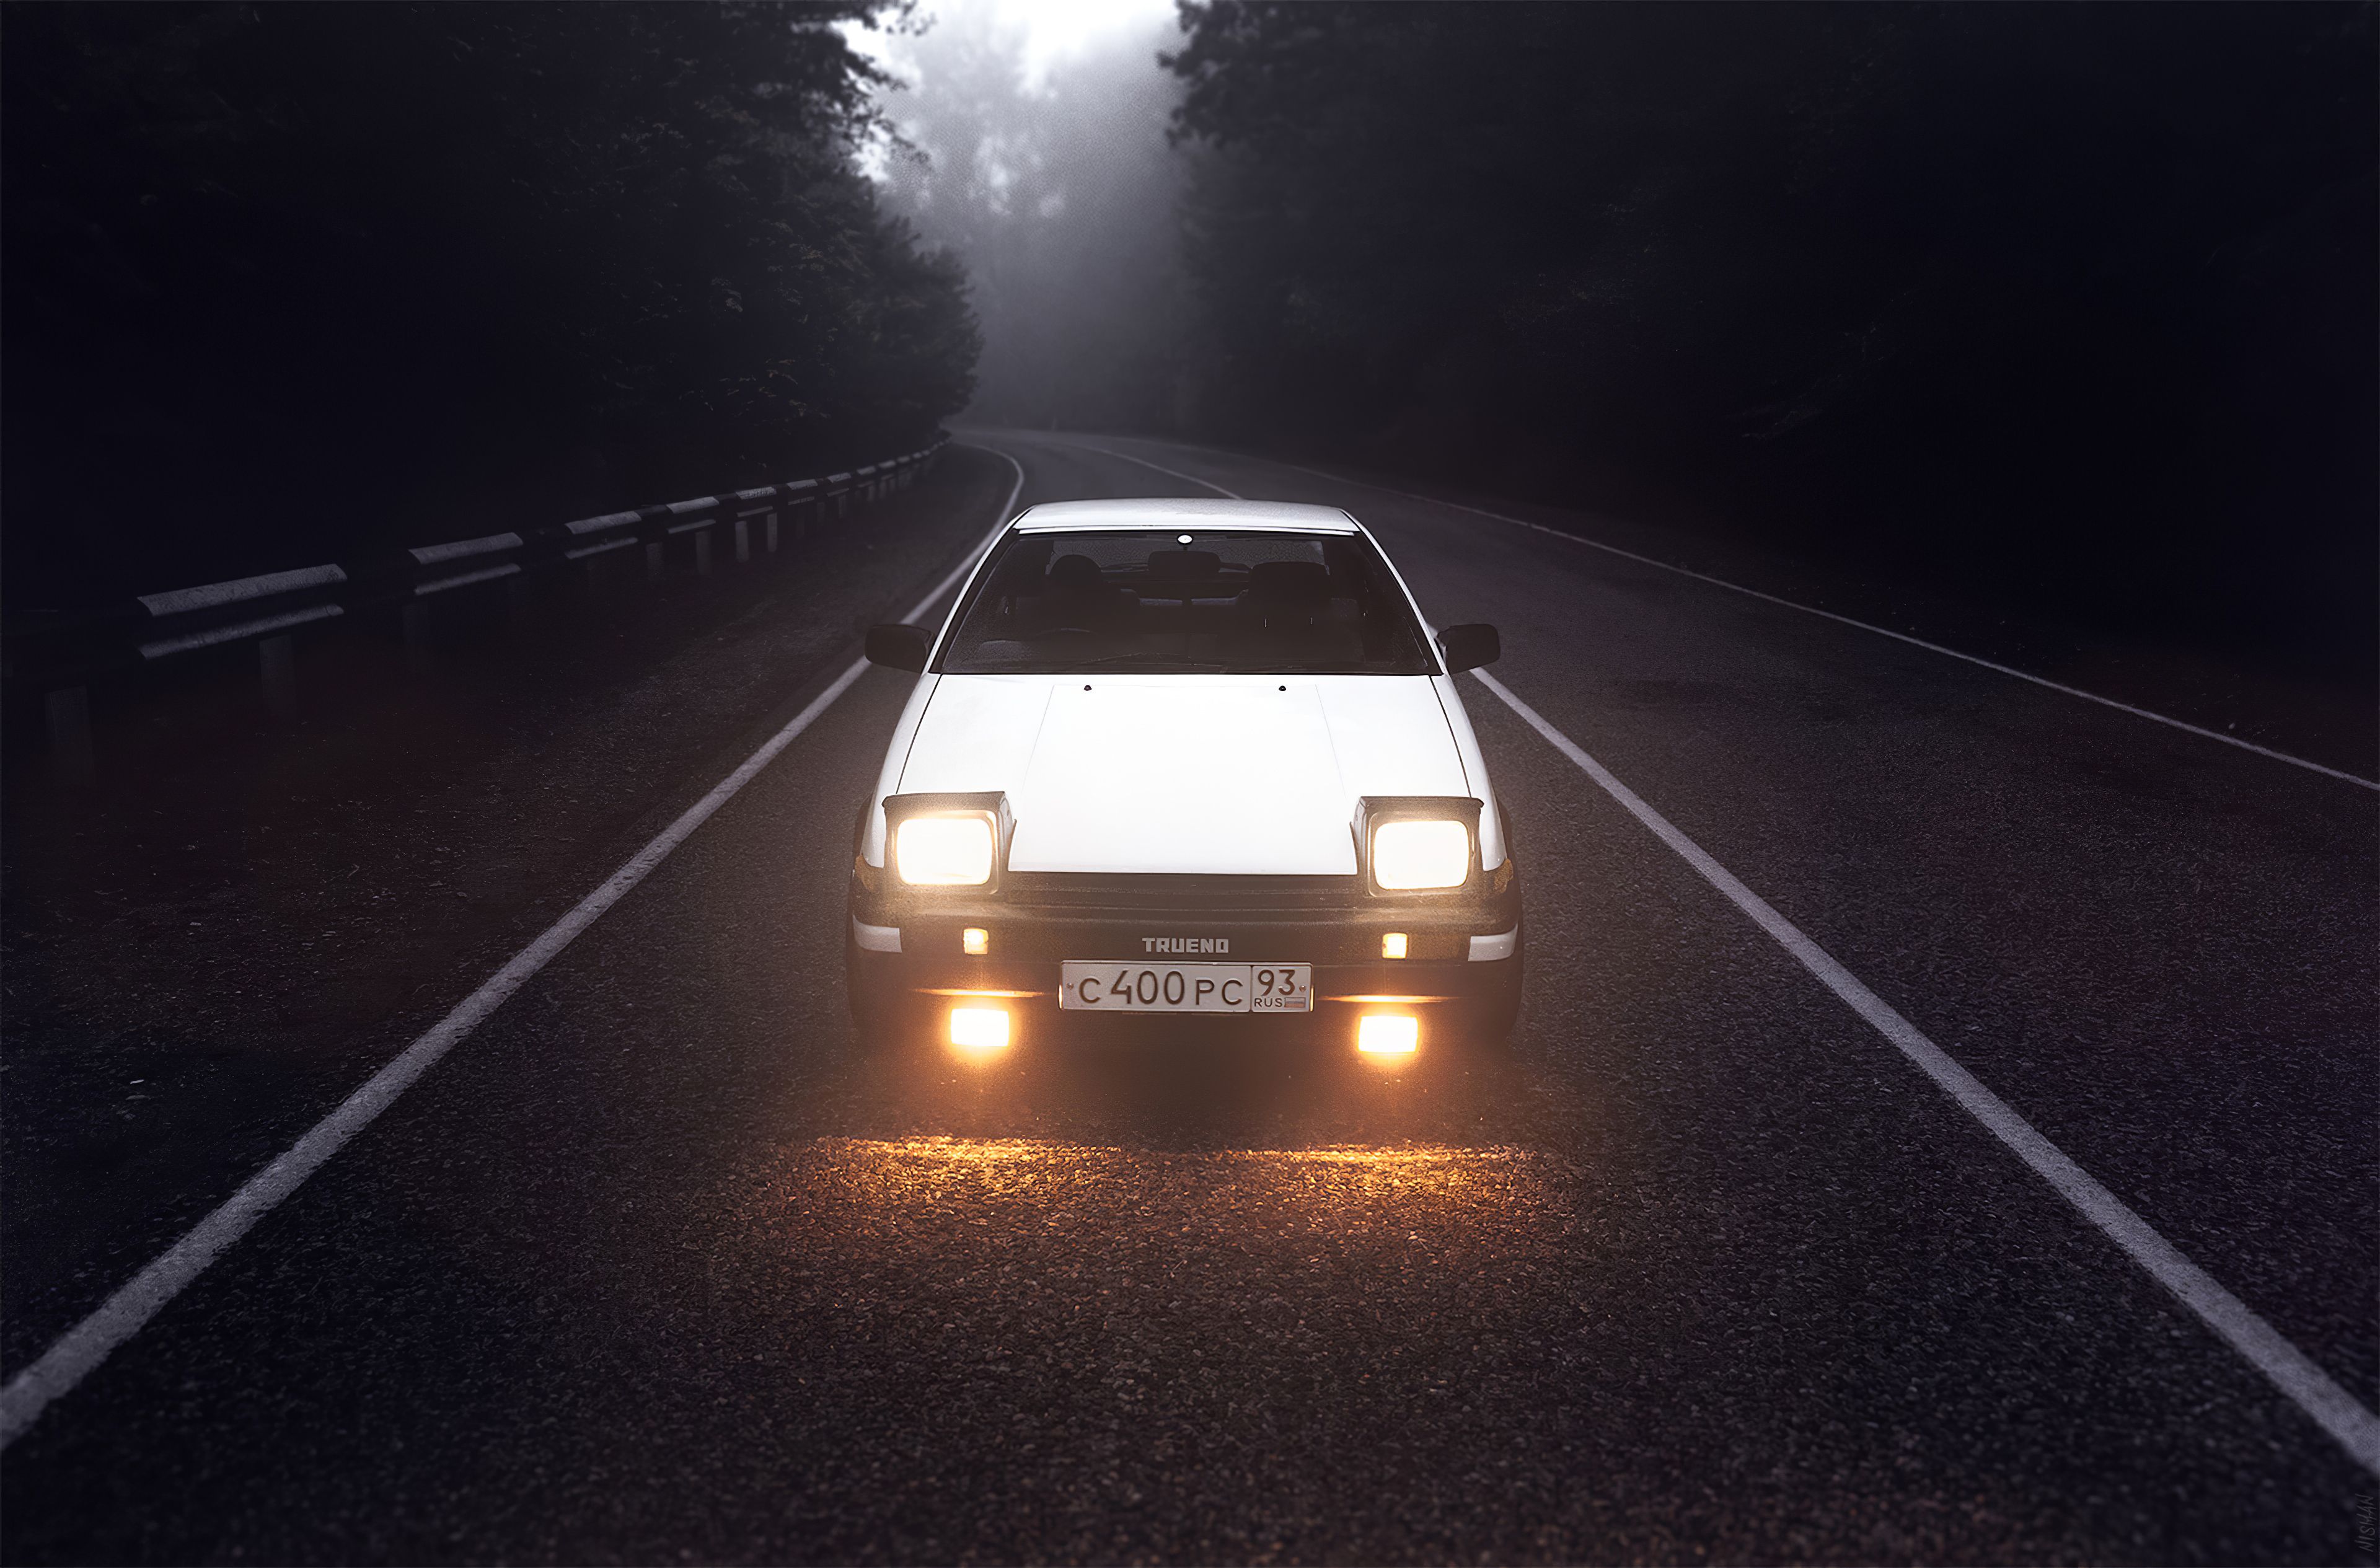 Trueno AE86 4k, HD Cars, 4k Wallpaper, Image, Background